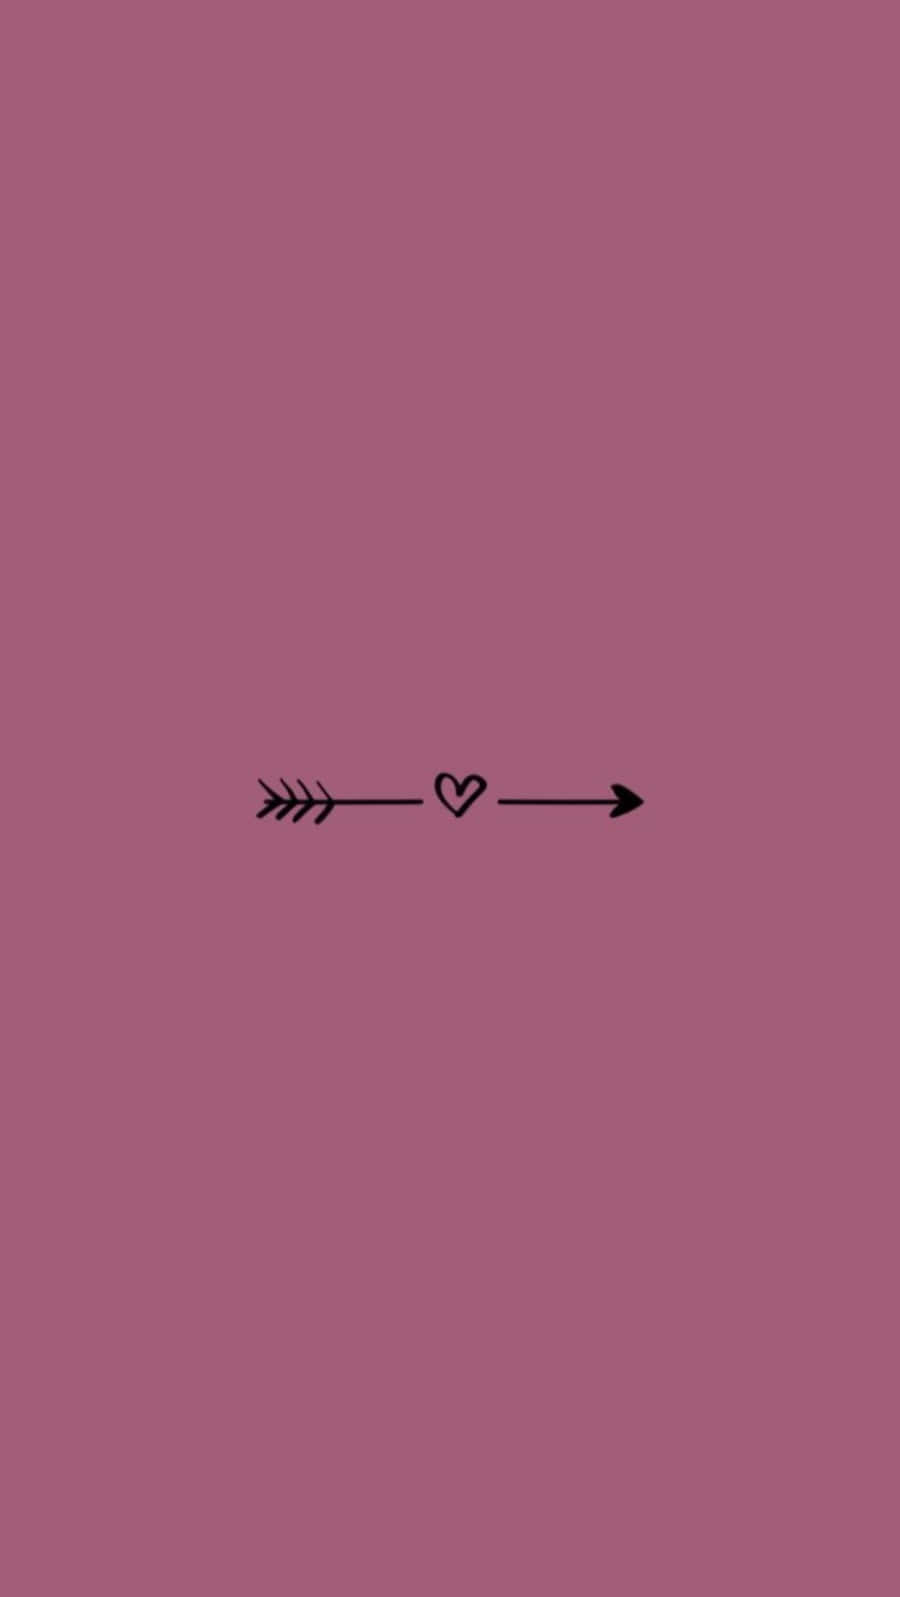 Girly Tumblr Black Heart And Arrow Wallpaper